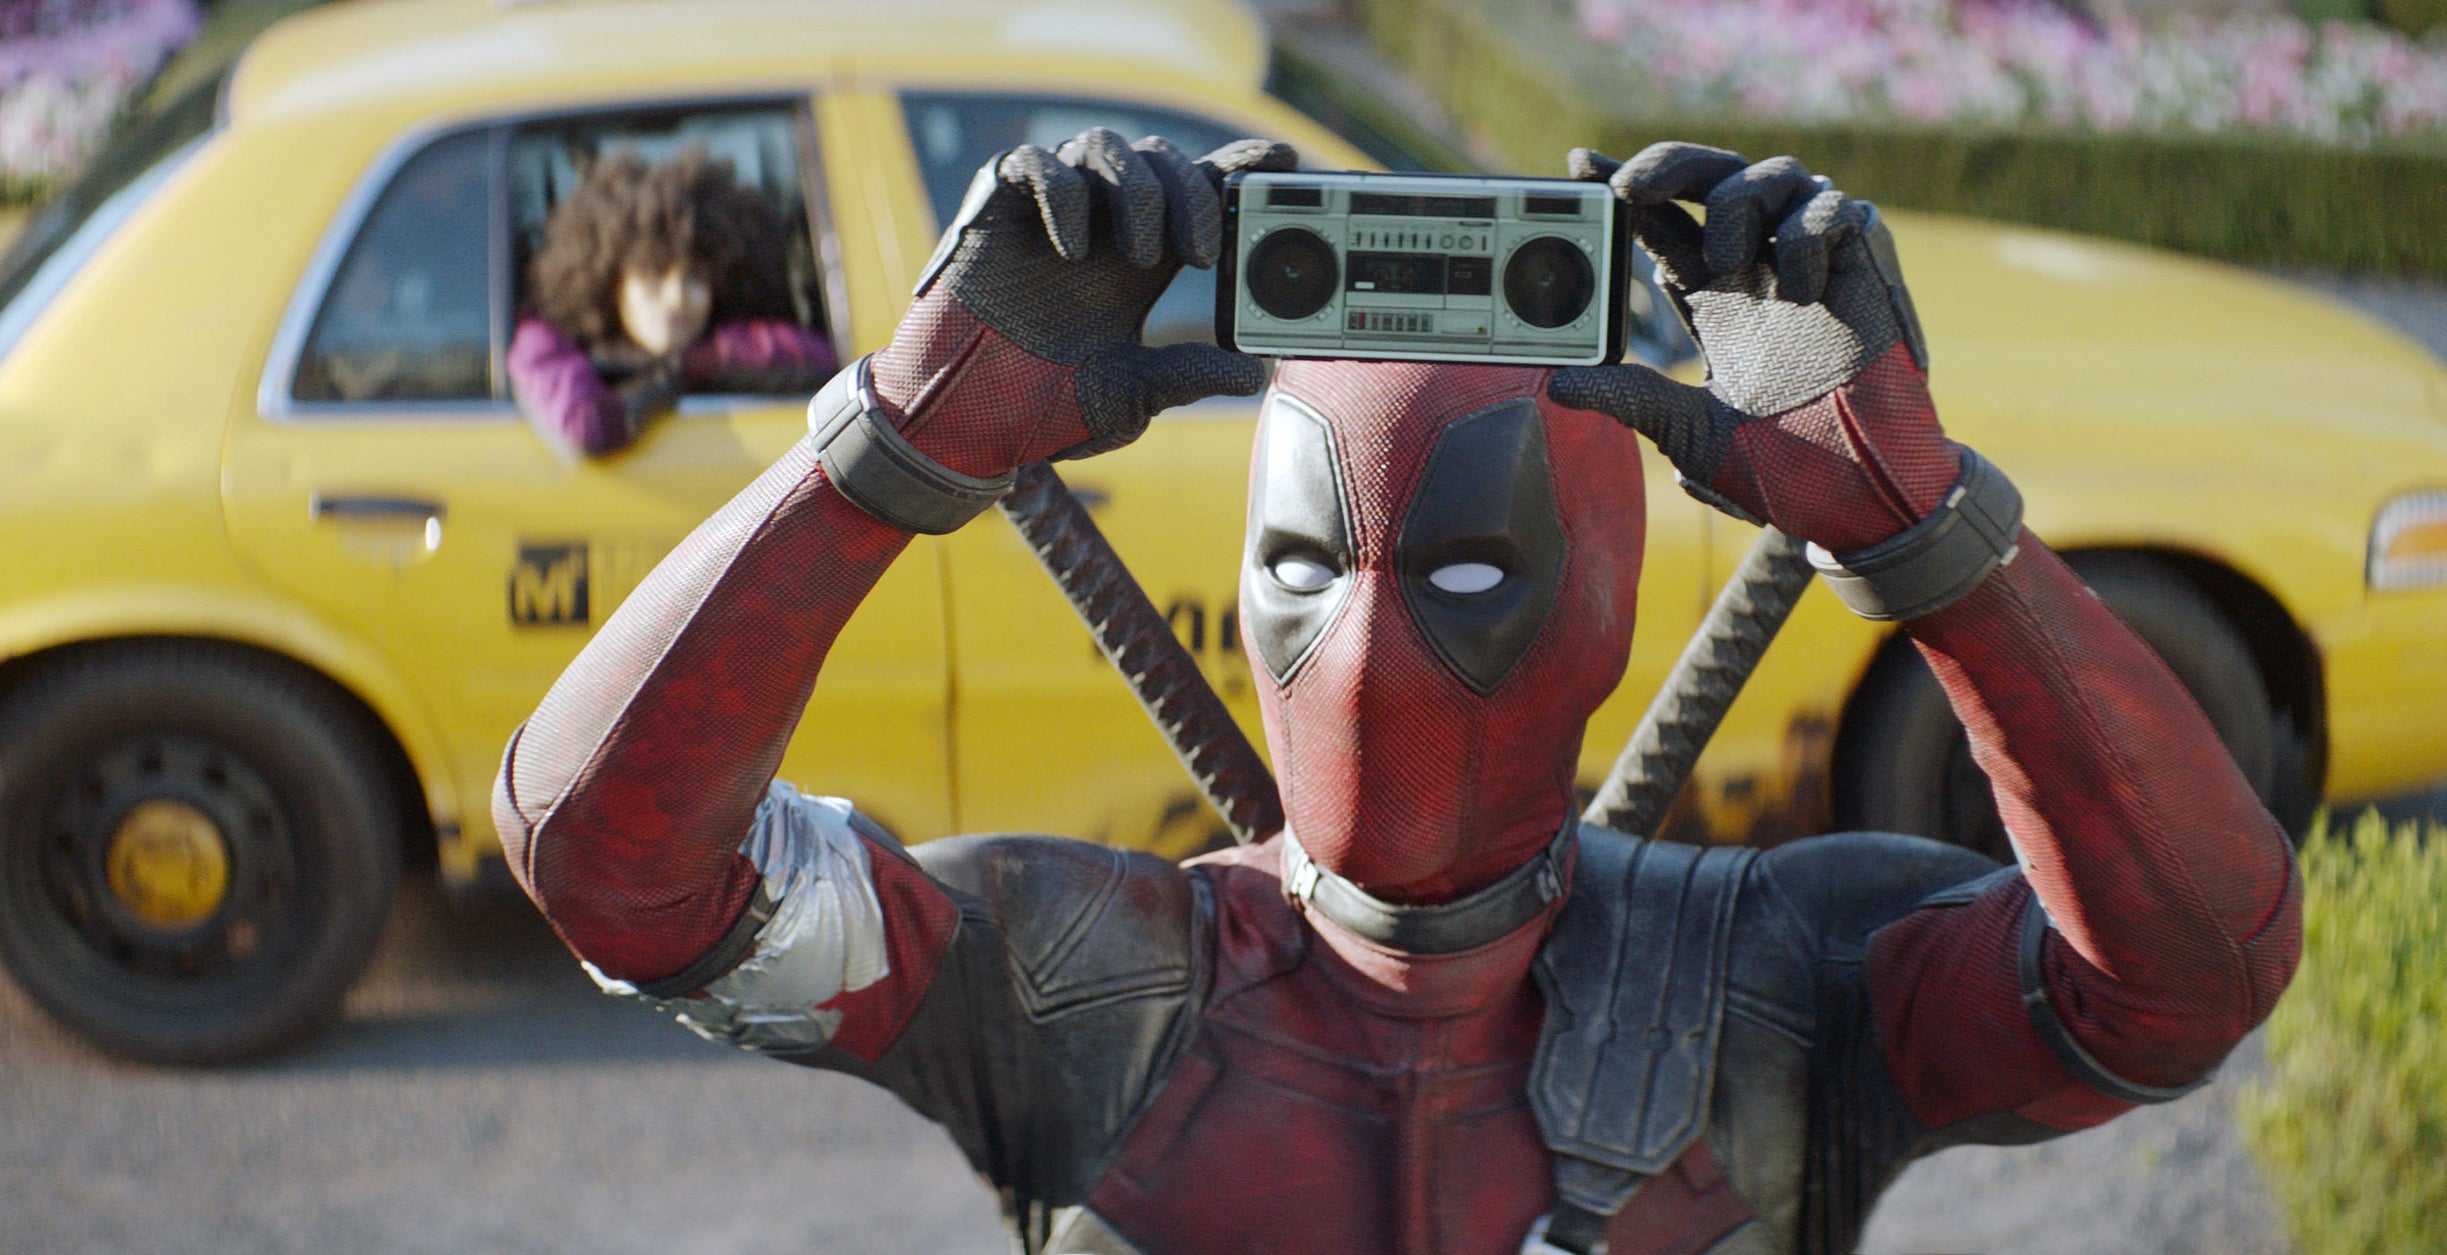 Ryan Reynolds as Deadpool holding a mini boom box